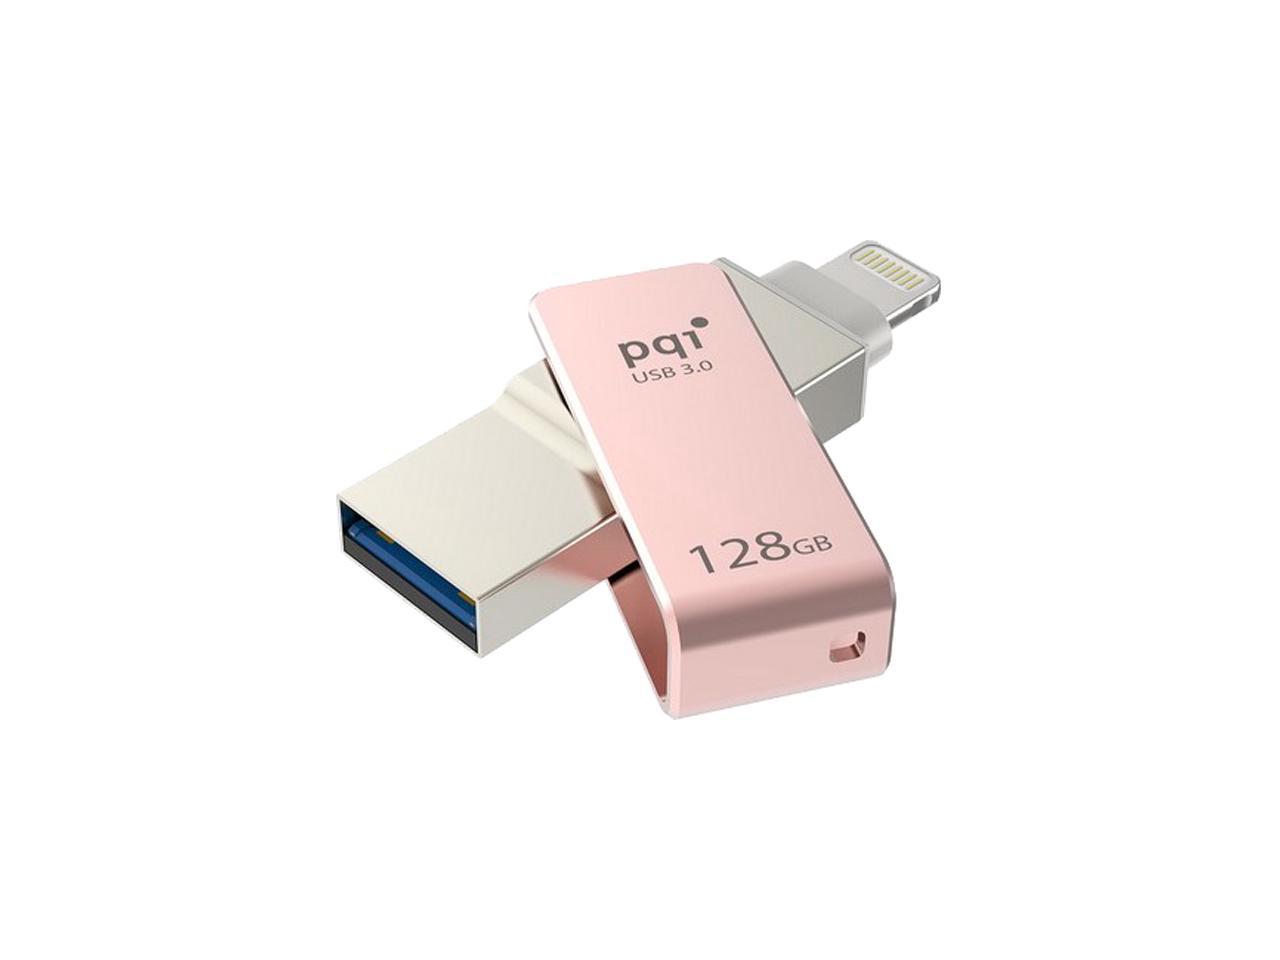 PQI iConnect Mini [Apple MFi] 128GB Mobile Flash Drive w/ Lightning Connector for iPhones / iPads / iPod / Mac & PC USB 3.0 (Rose Gold) Model 6I04-128GR3001